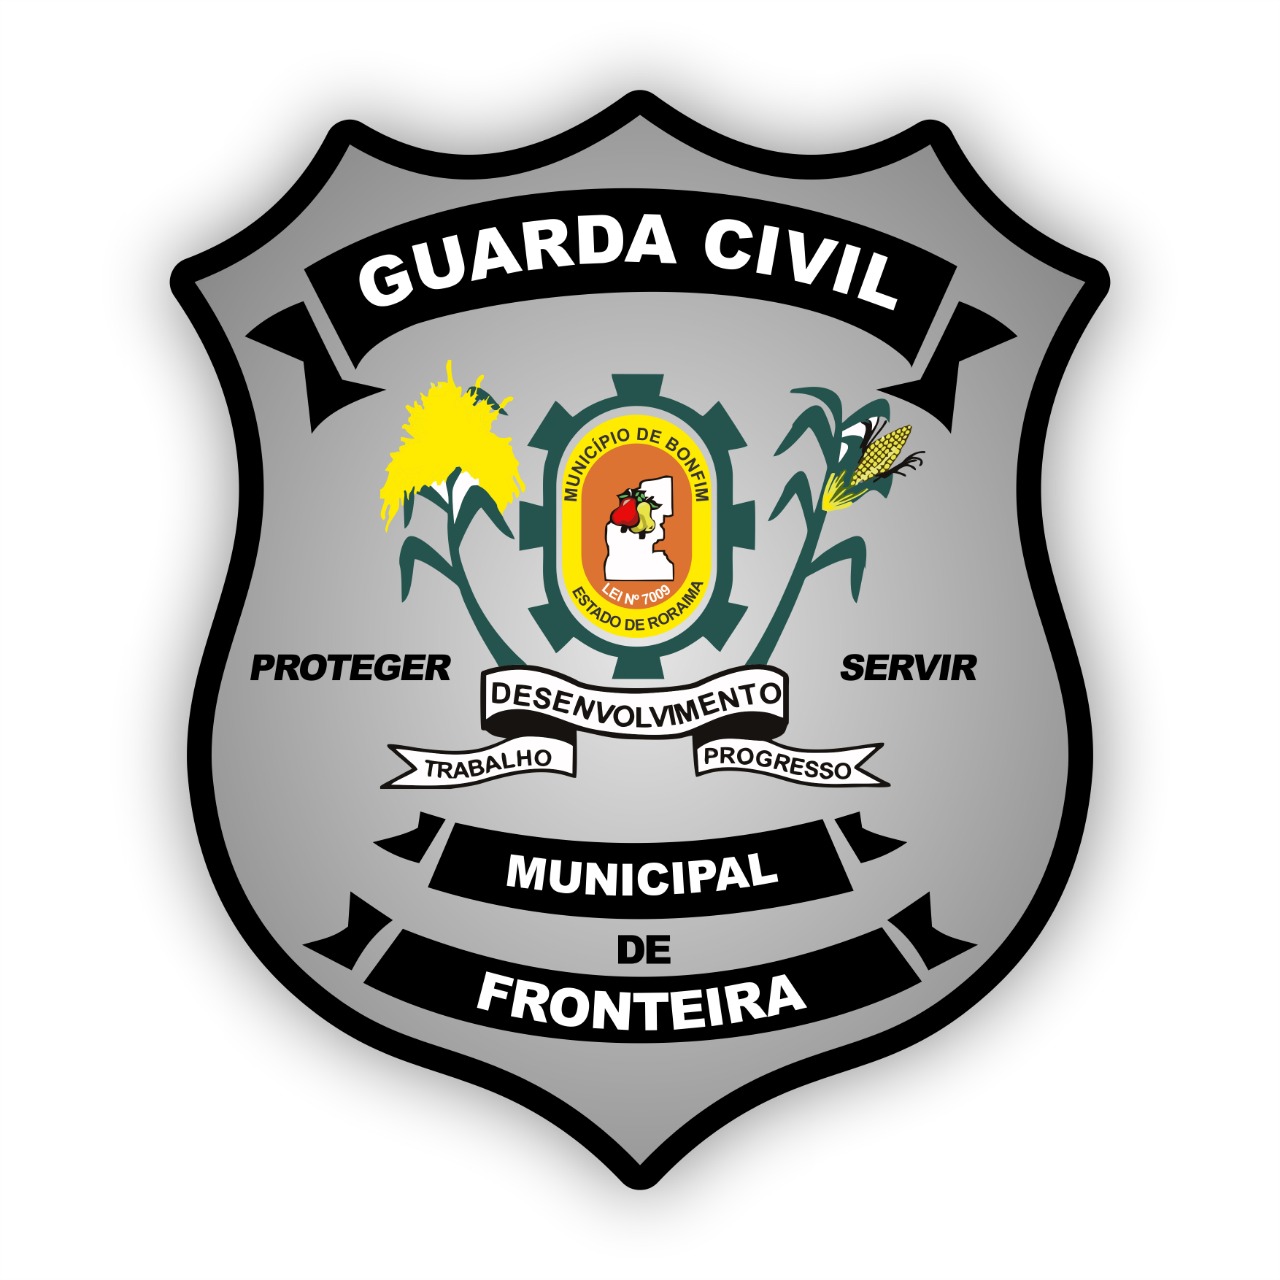 Prefeitura de Bonfim convoca candidatos aprovados na primeira fase do concurso para Guarda Civil Municipal de Fronteira de Bonfim, para matrícula na academia